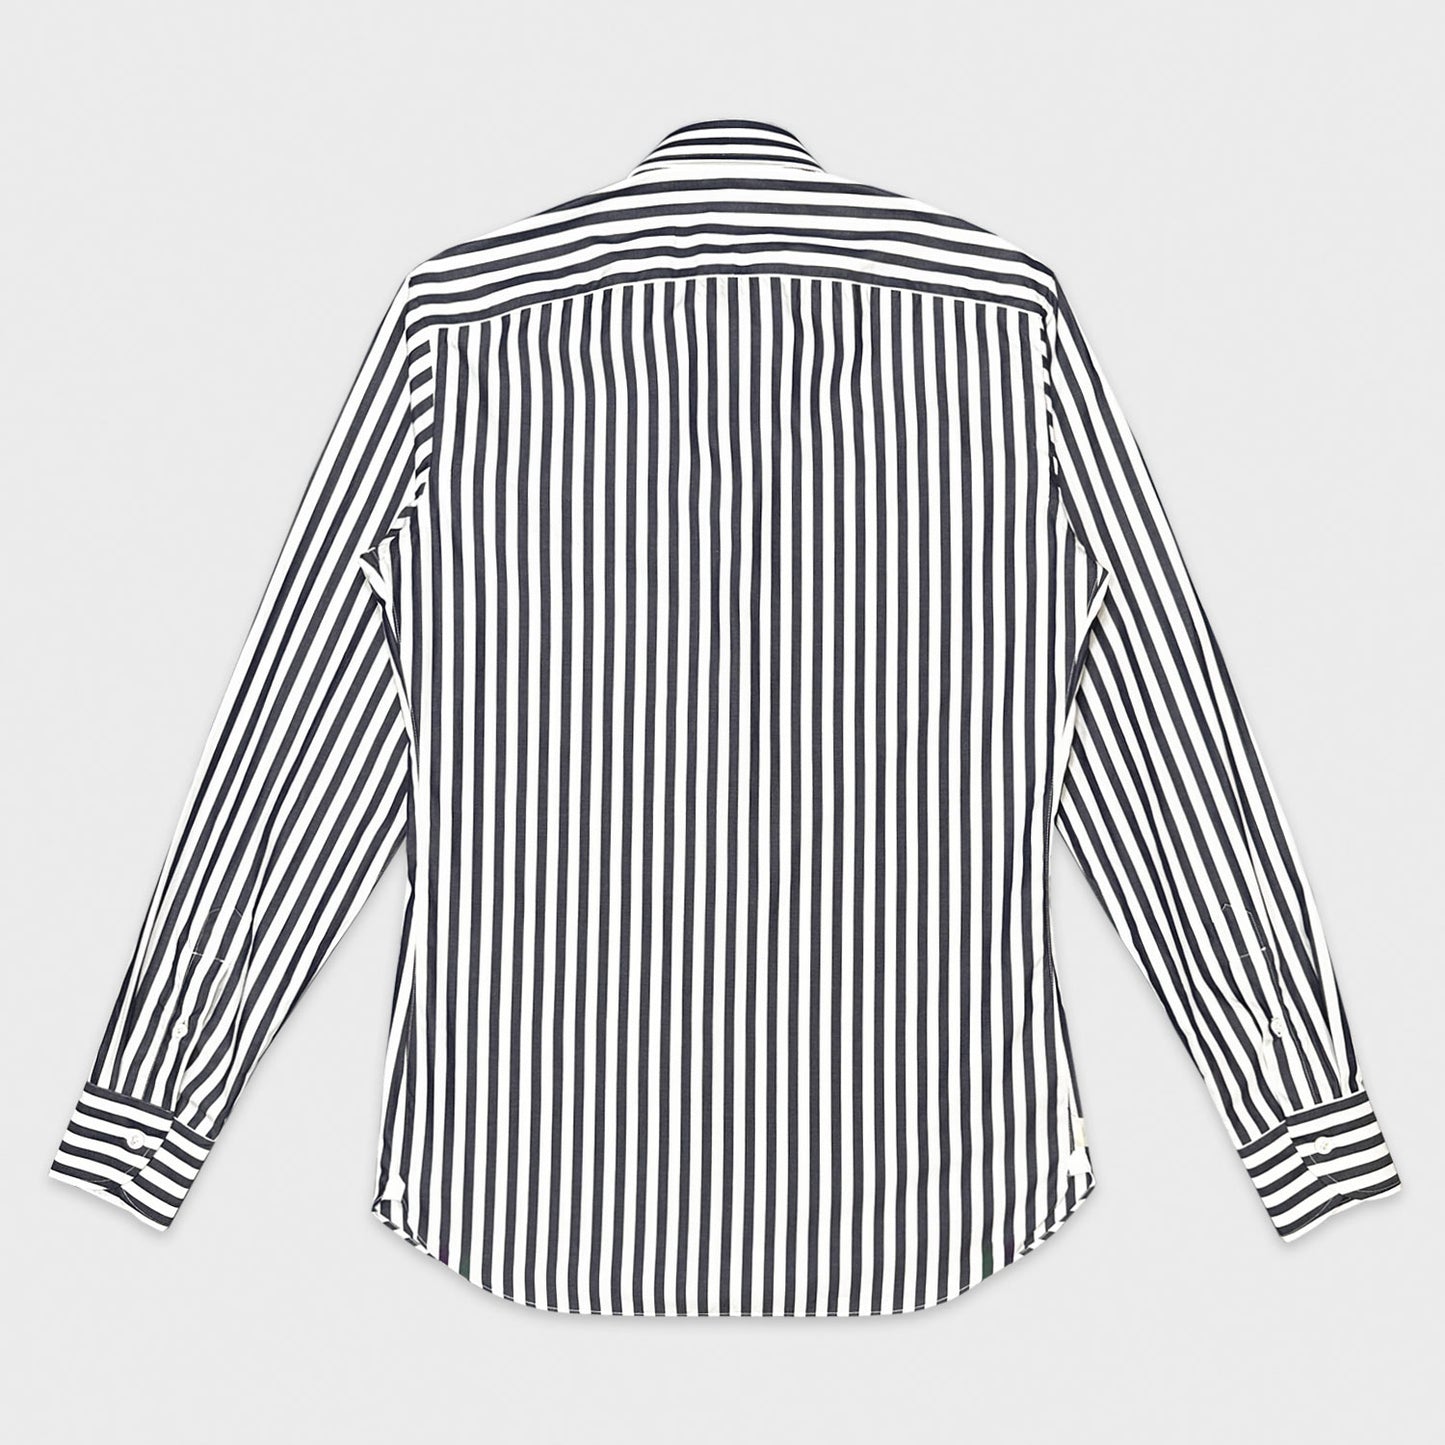 Borriello Navy Blue Striped Shirt Popeline Cotton-Wools Boutique Uomo